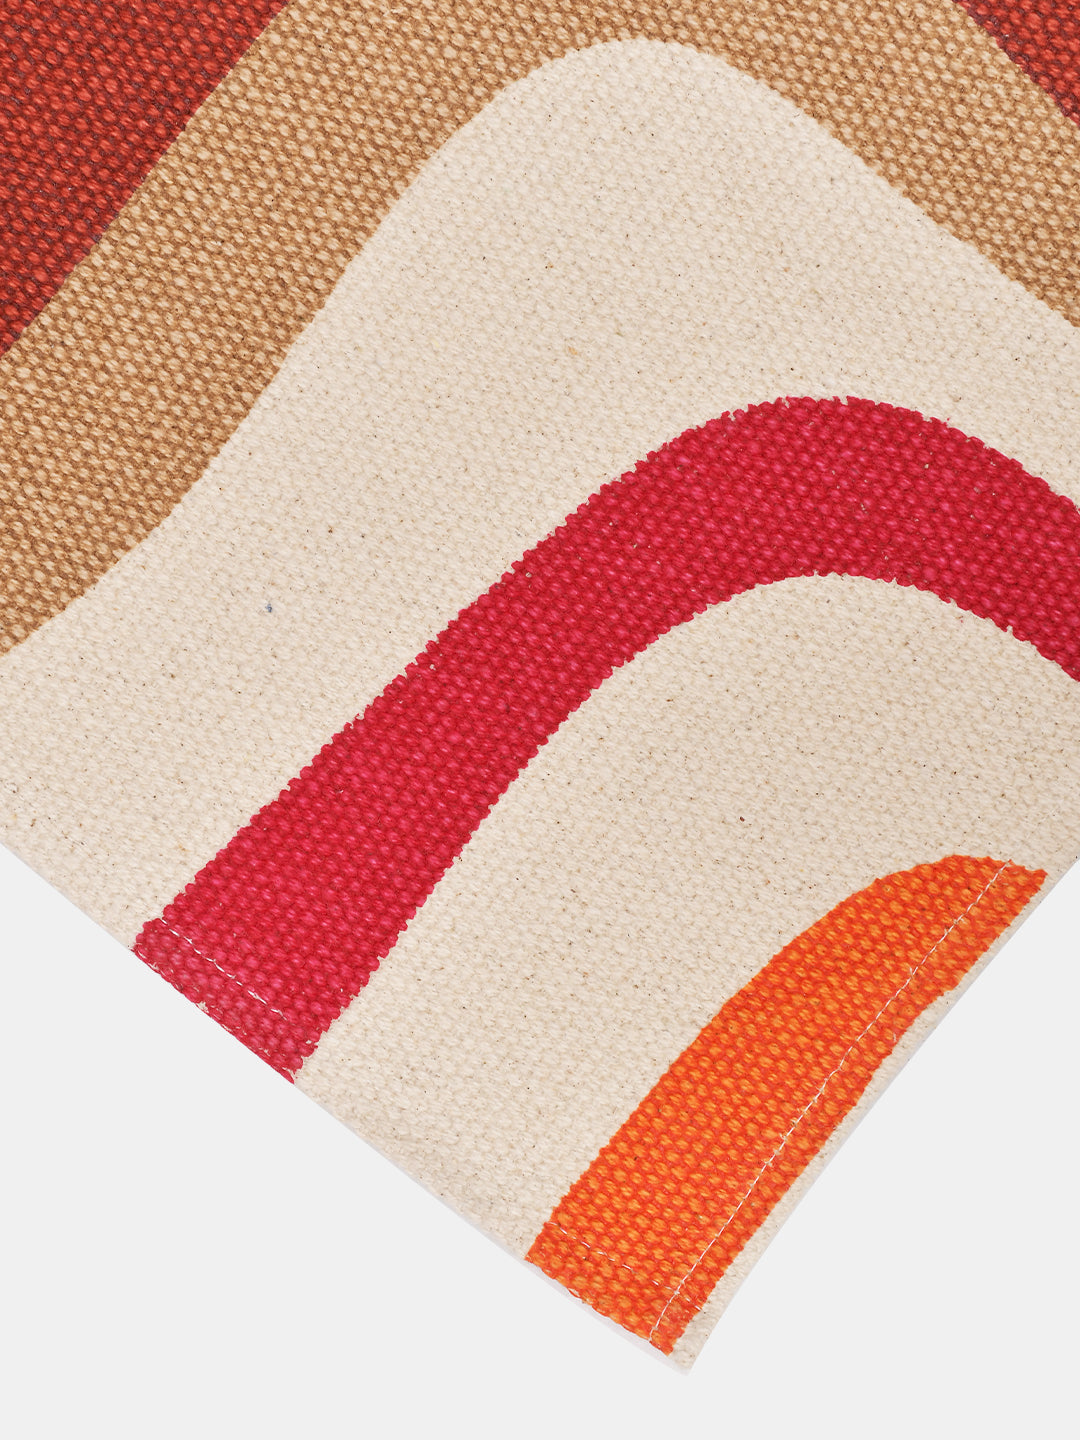 Blanc9 Hurly-Burly Rusty Red 4'x5.5' Printed Cotton Carpet